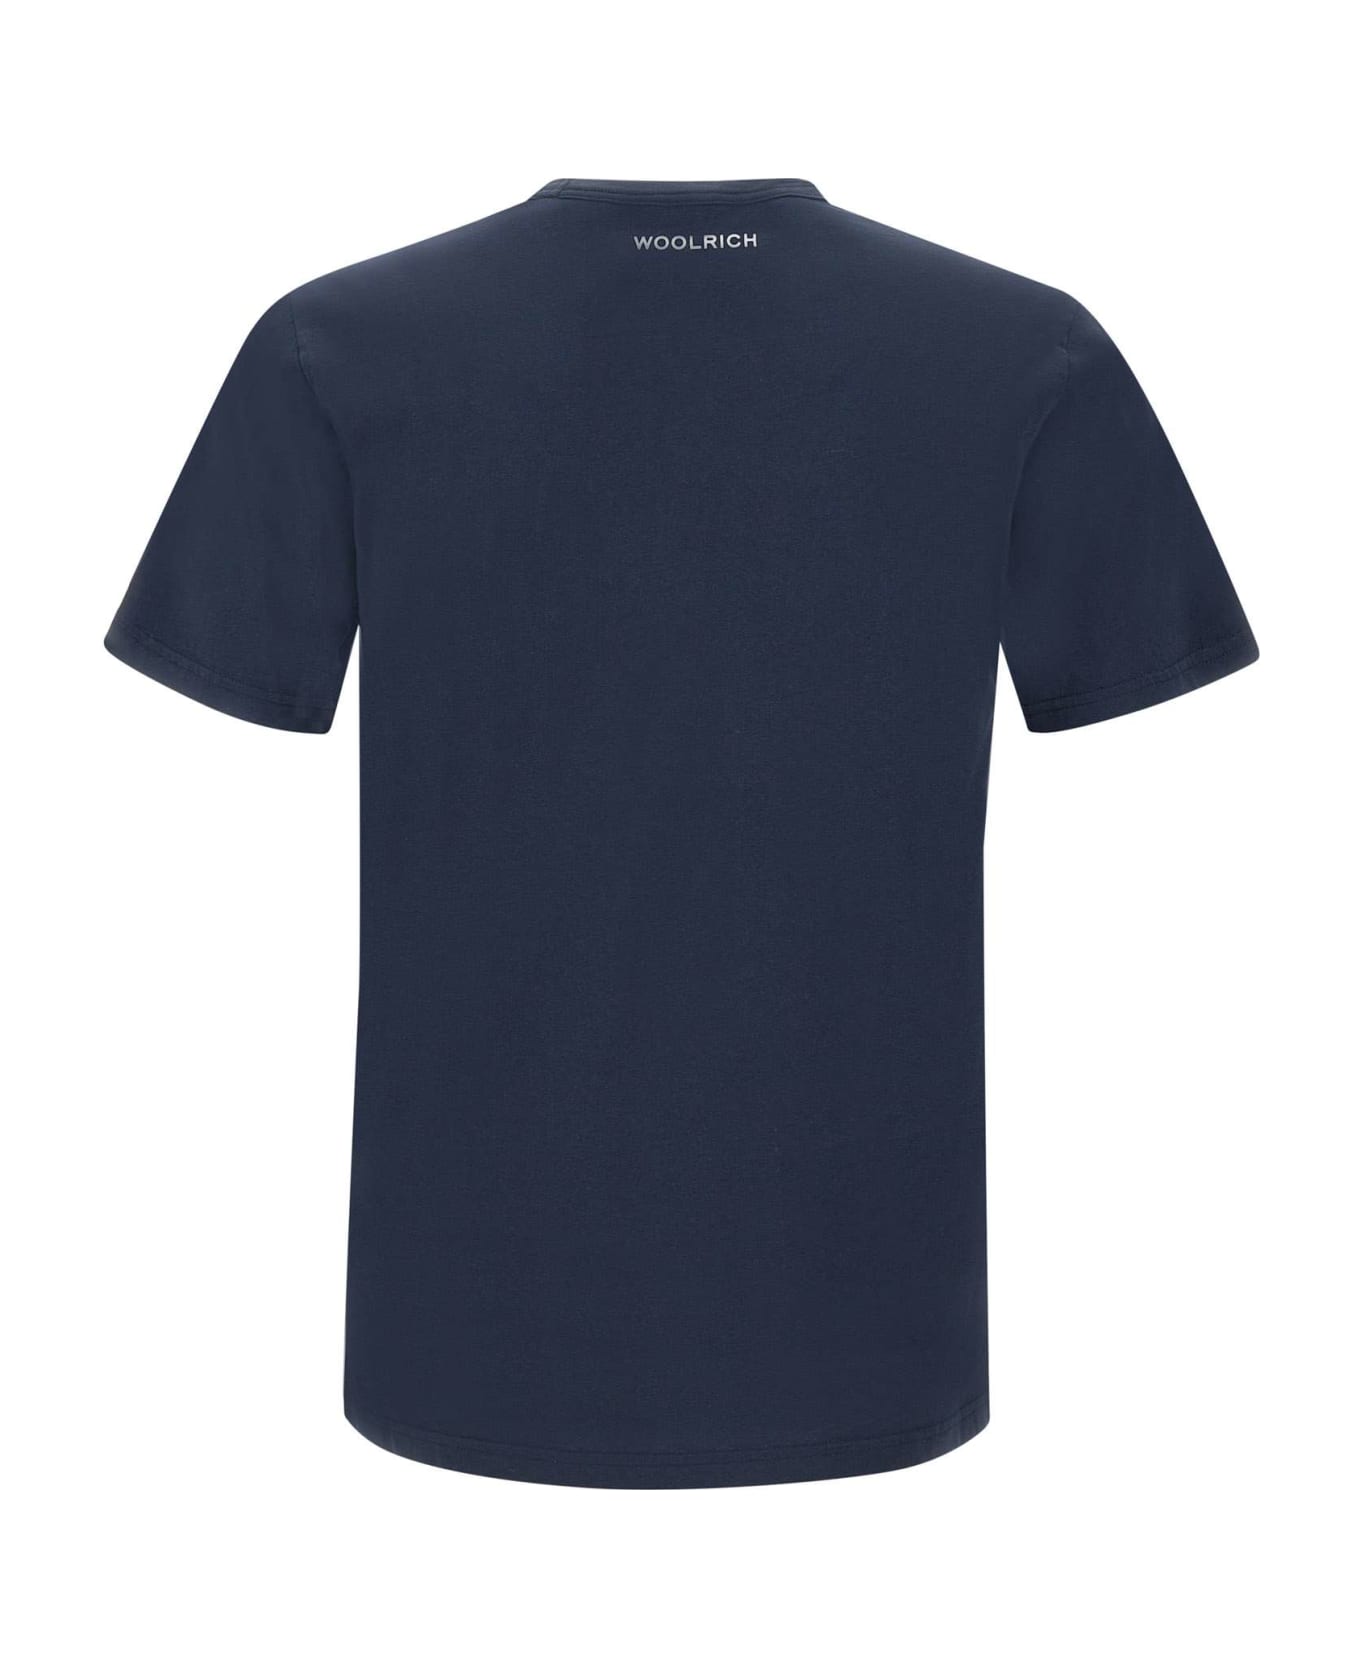 Woolrich 'boat' Cotton T-shirt - BLUE